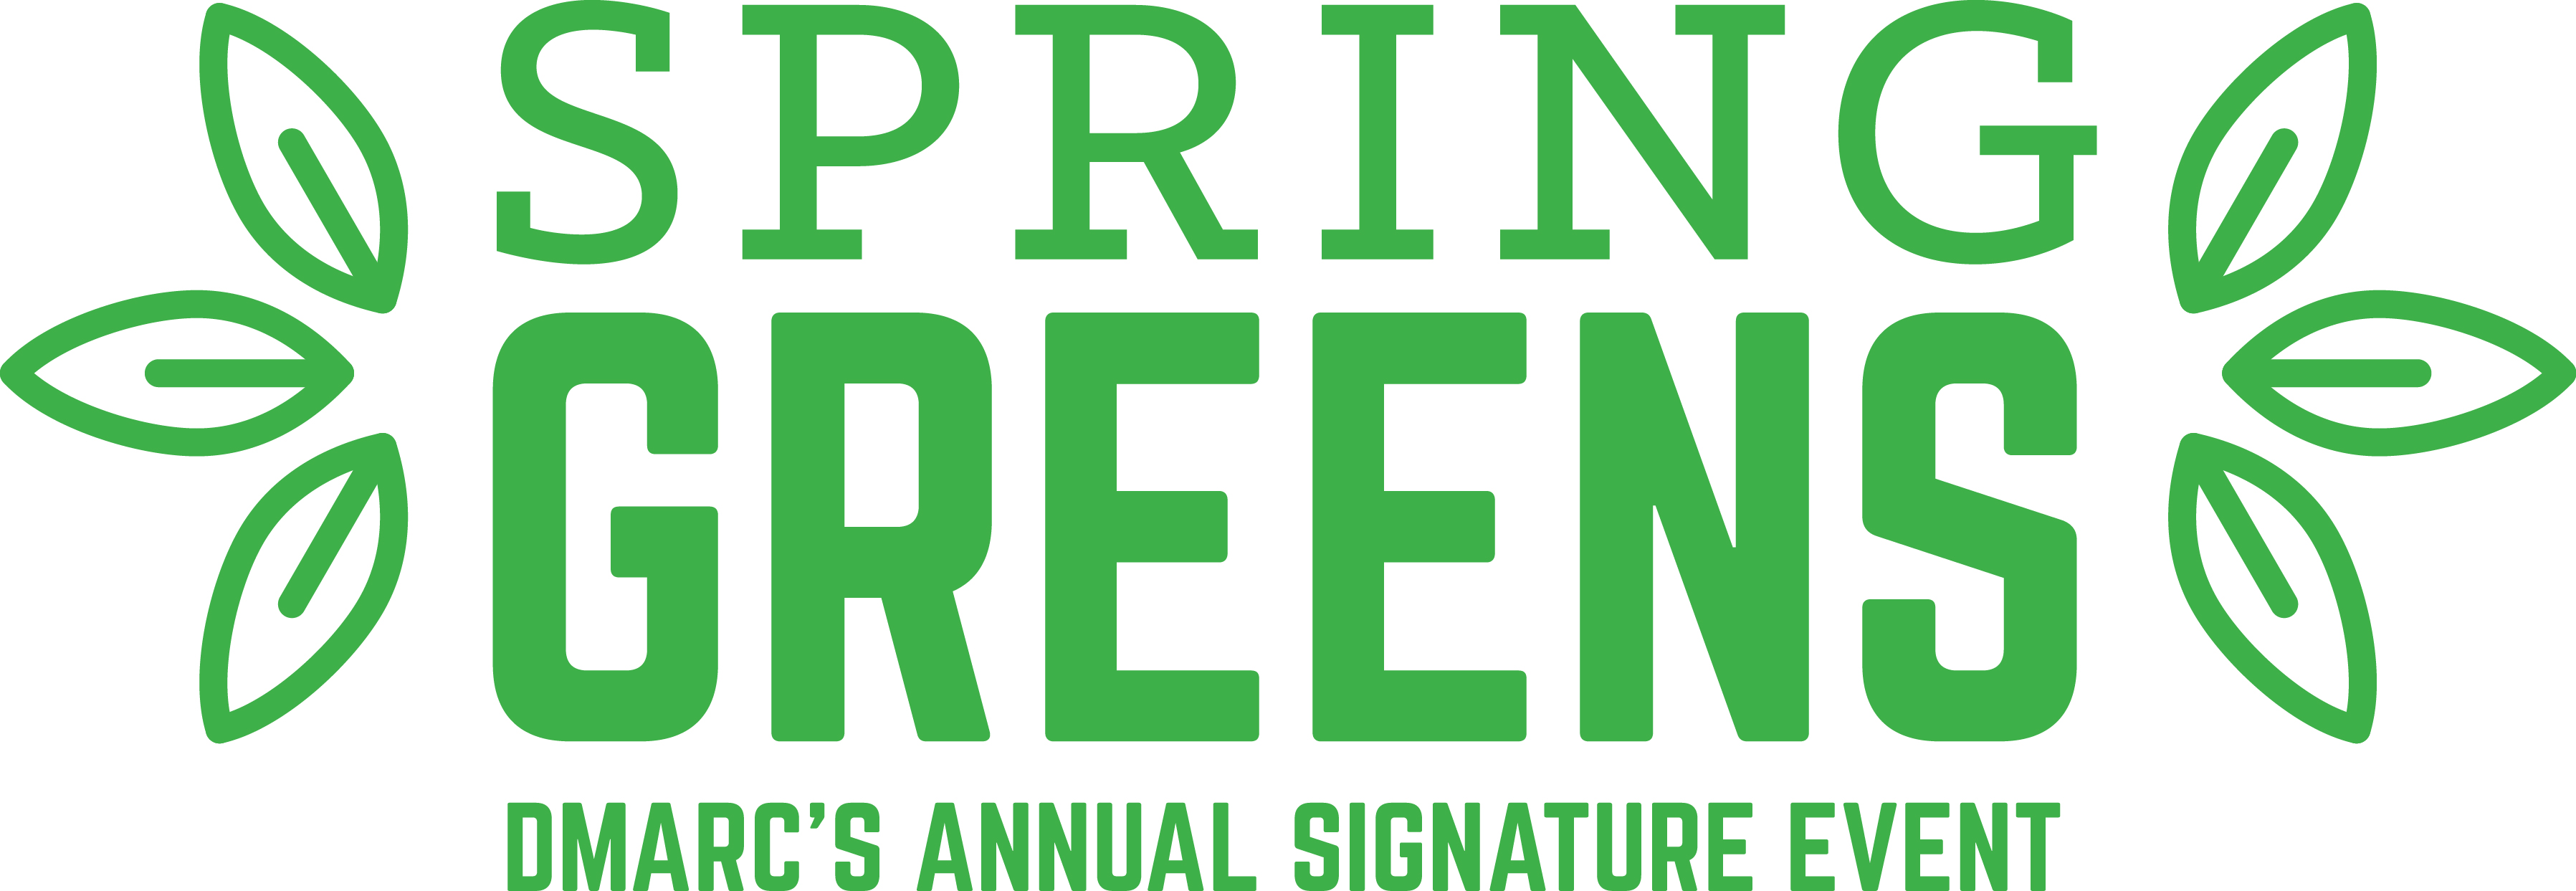 spring greens logo